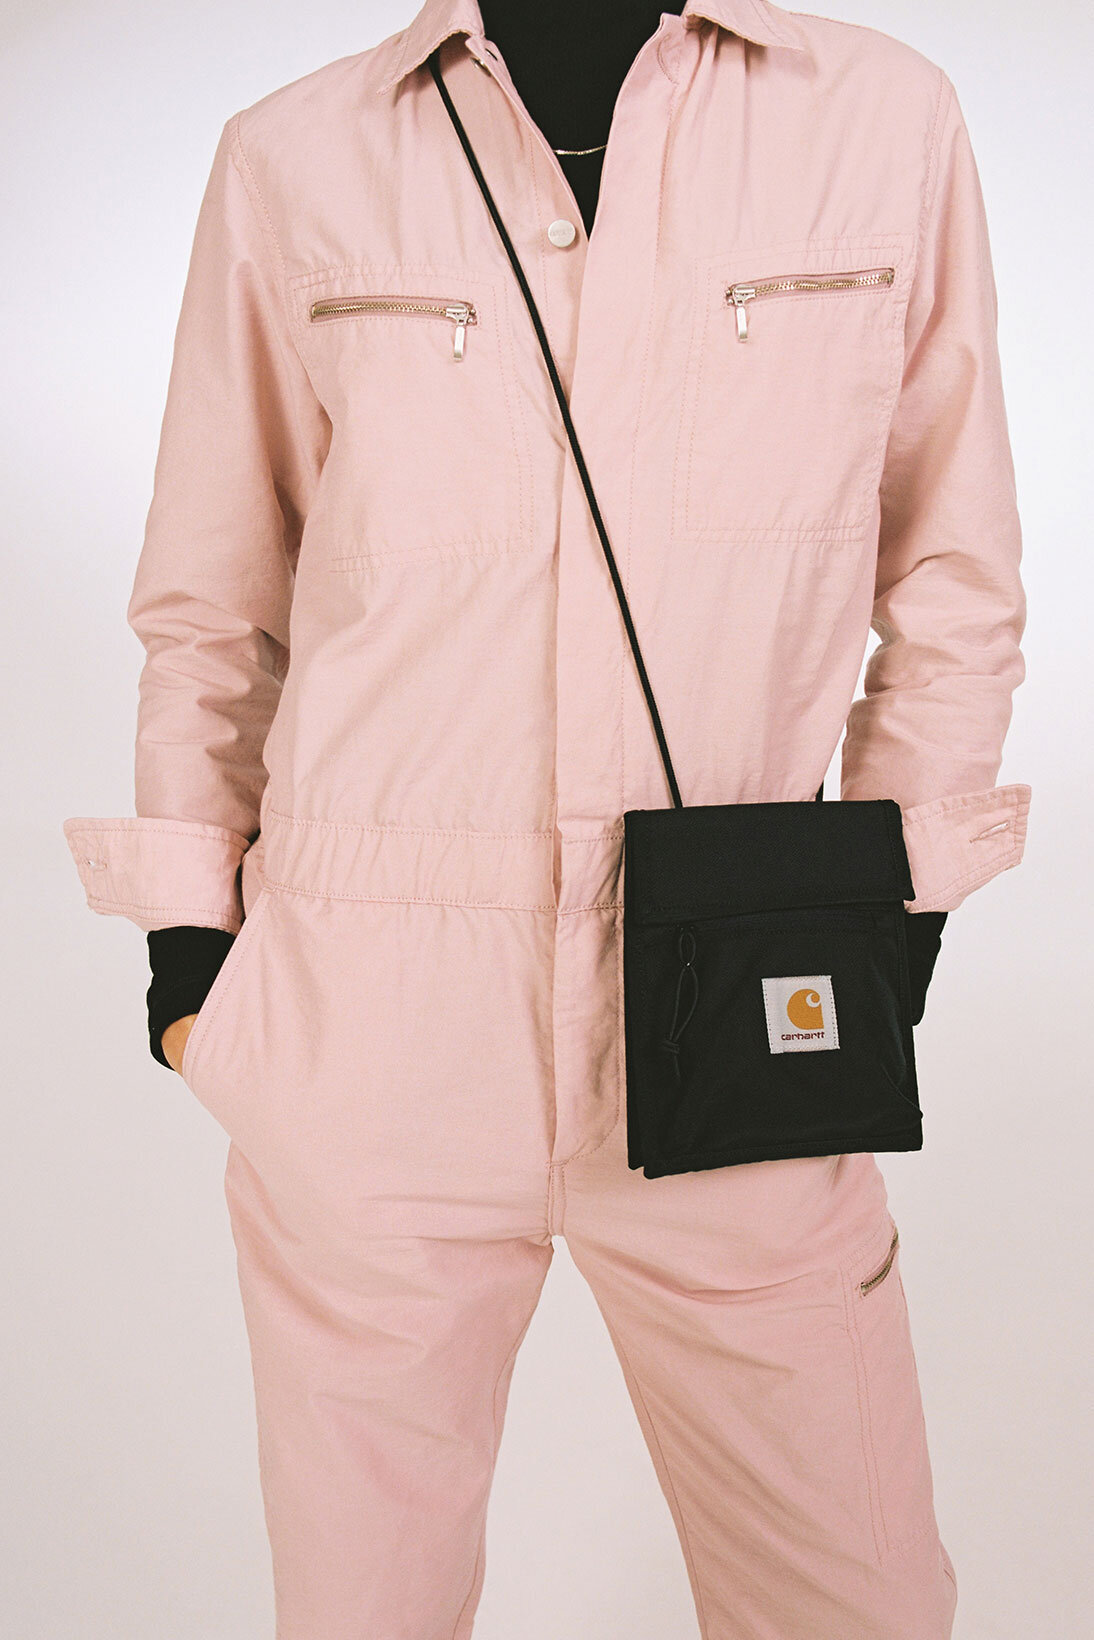 CNK-Carhartt-WIP-FW20-pink-boiler-suit-crossbody-bag.jpg